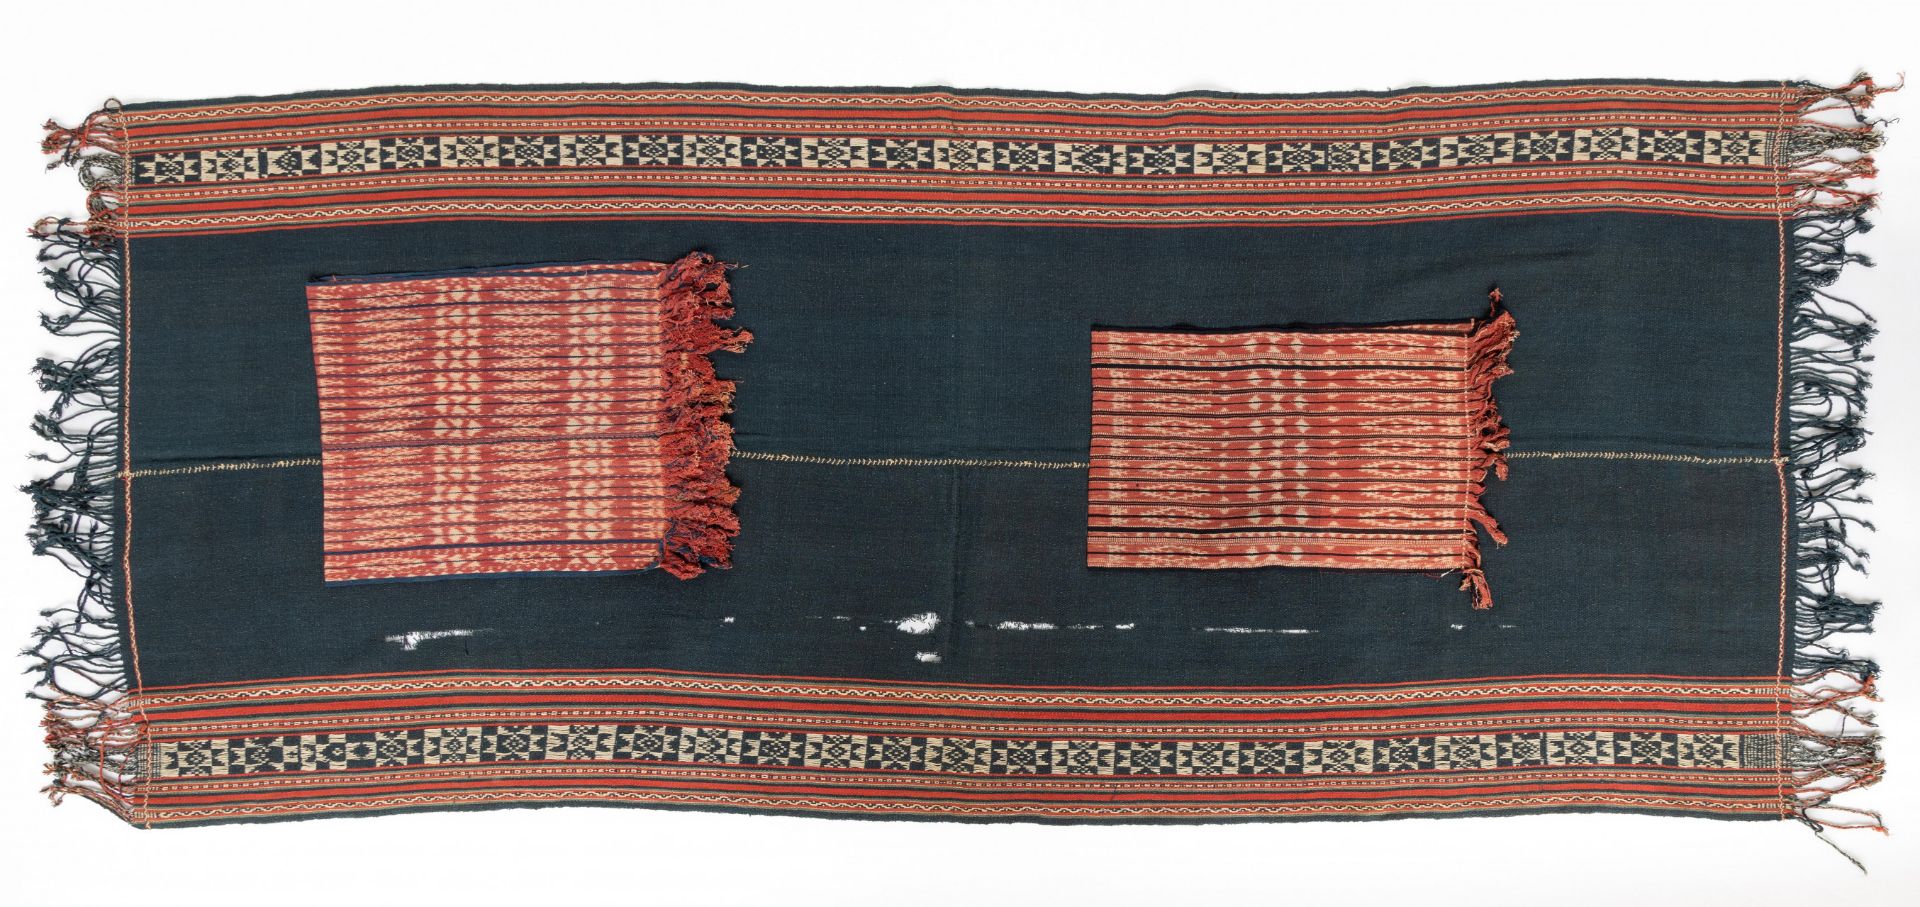 Timor, Insana-Maemsena, man's wrap, selendang, handspun cotton.